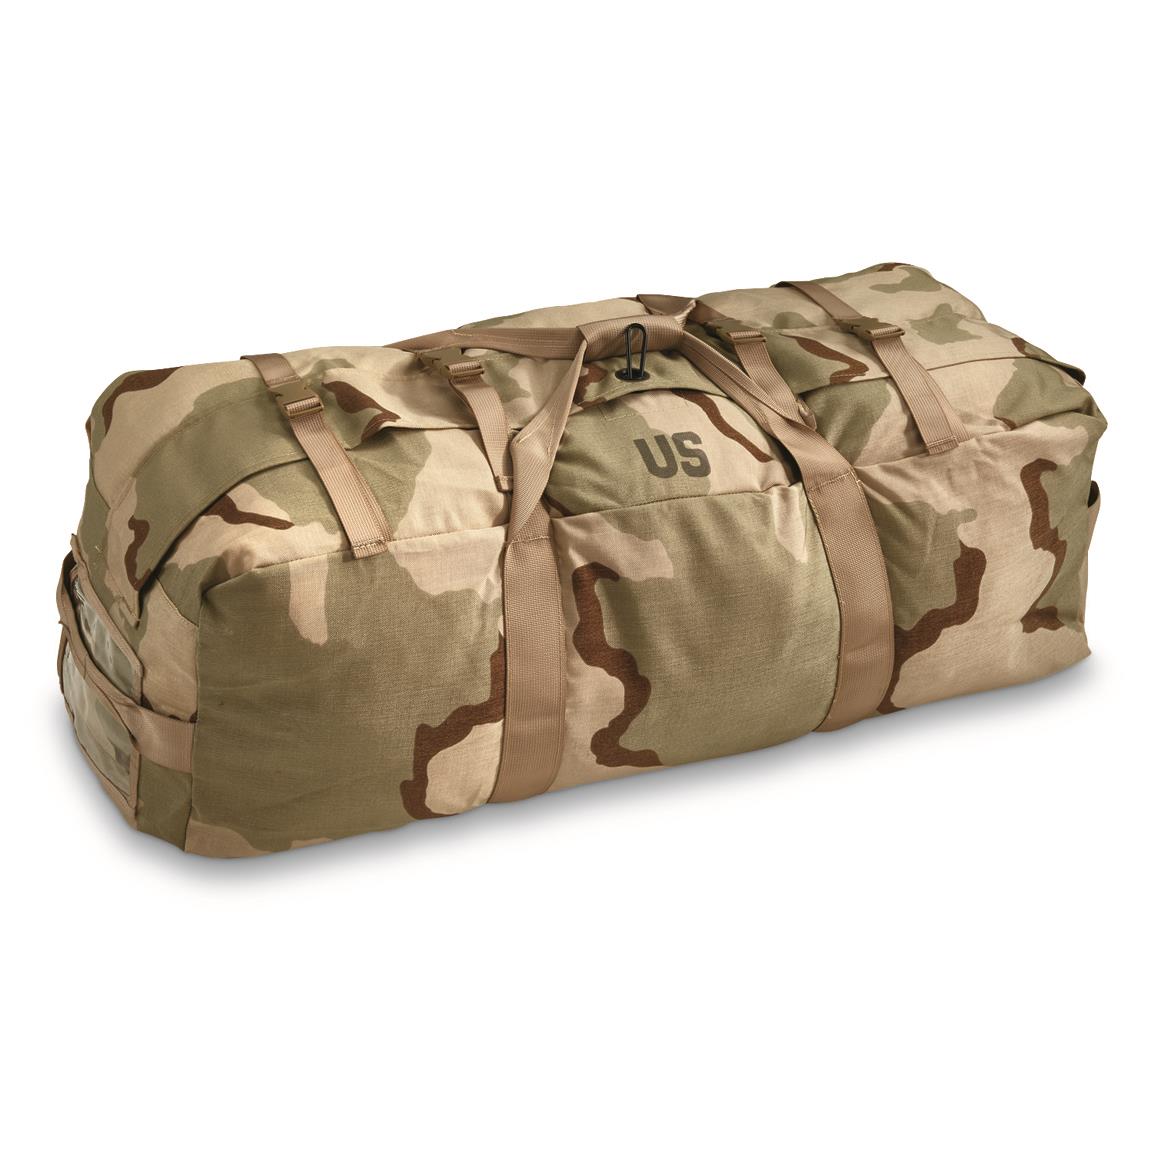 U.S. Military Surplus Desert Improved Duffel Bag, New, 3-color Desert